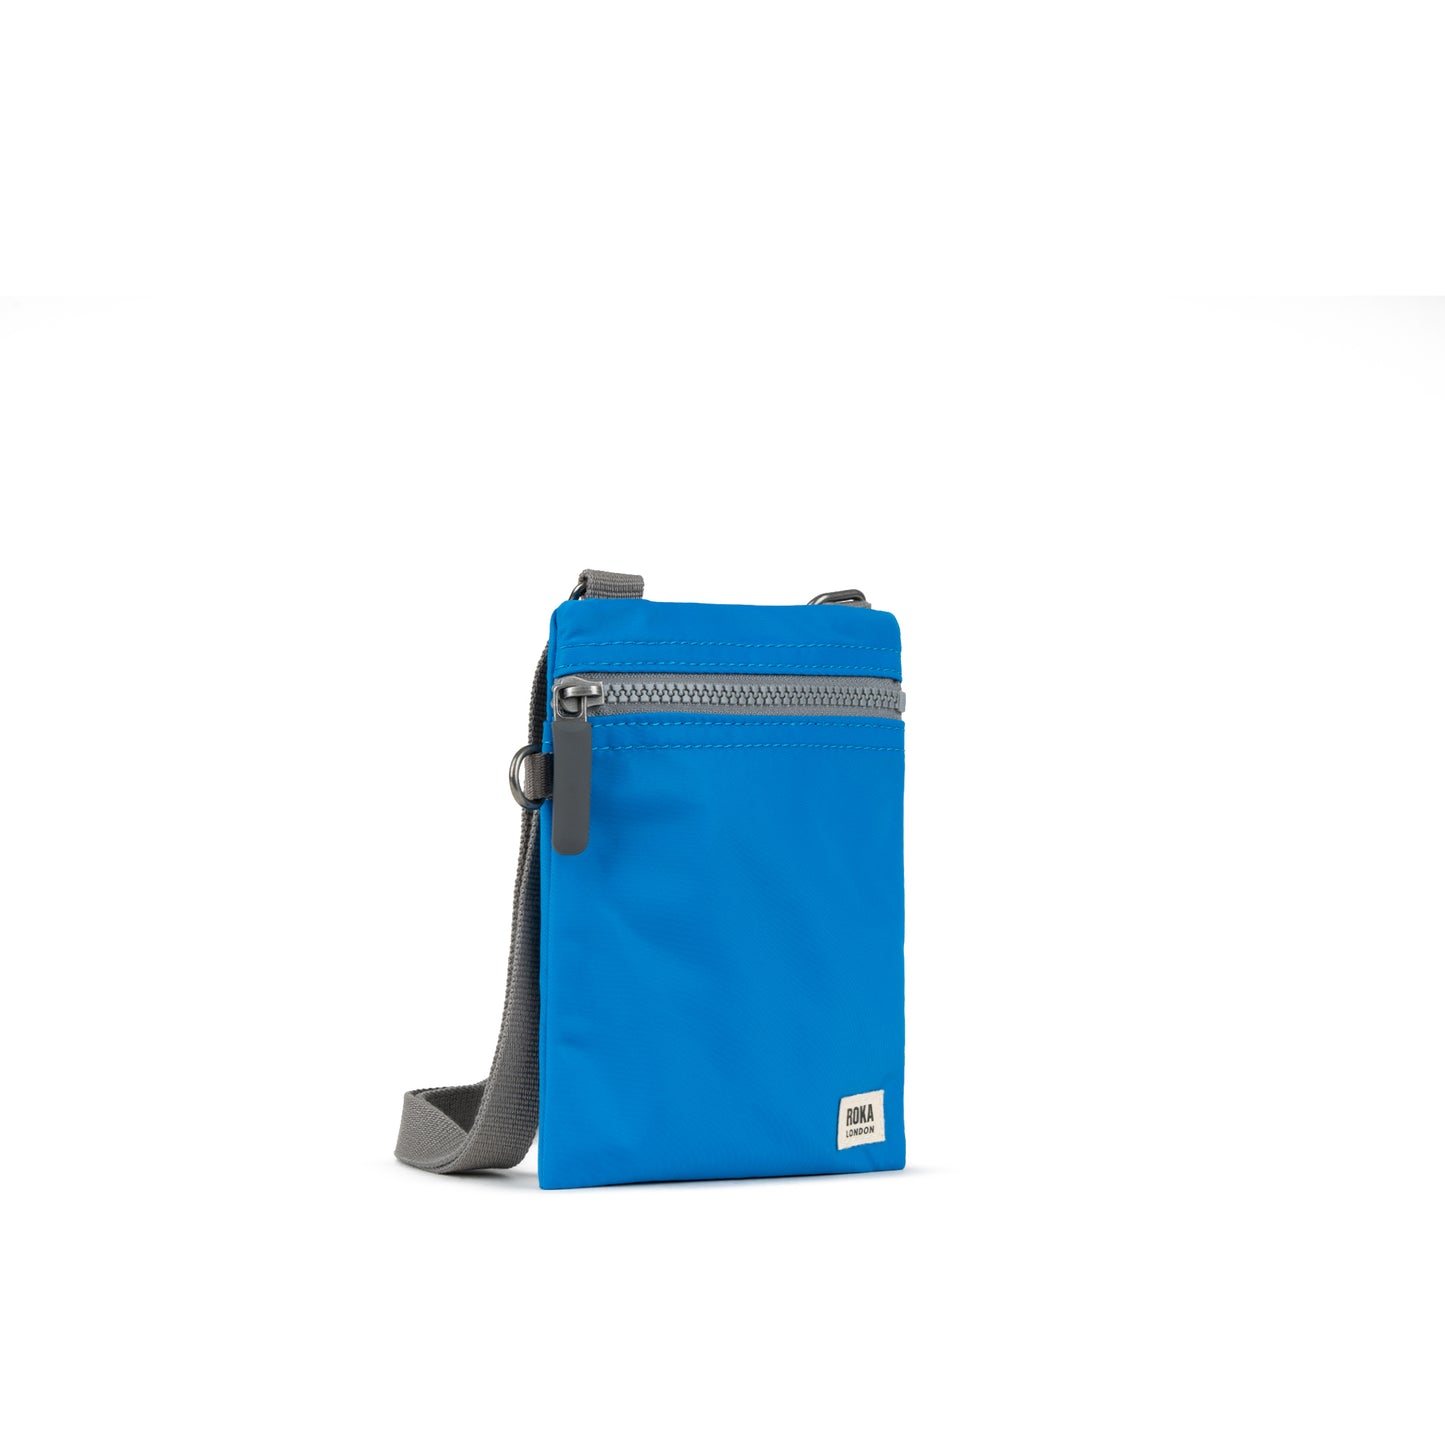 Roka London Chelsea Crossbody Phone Bag, Neon Blue (Recycled Nylon)